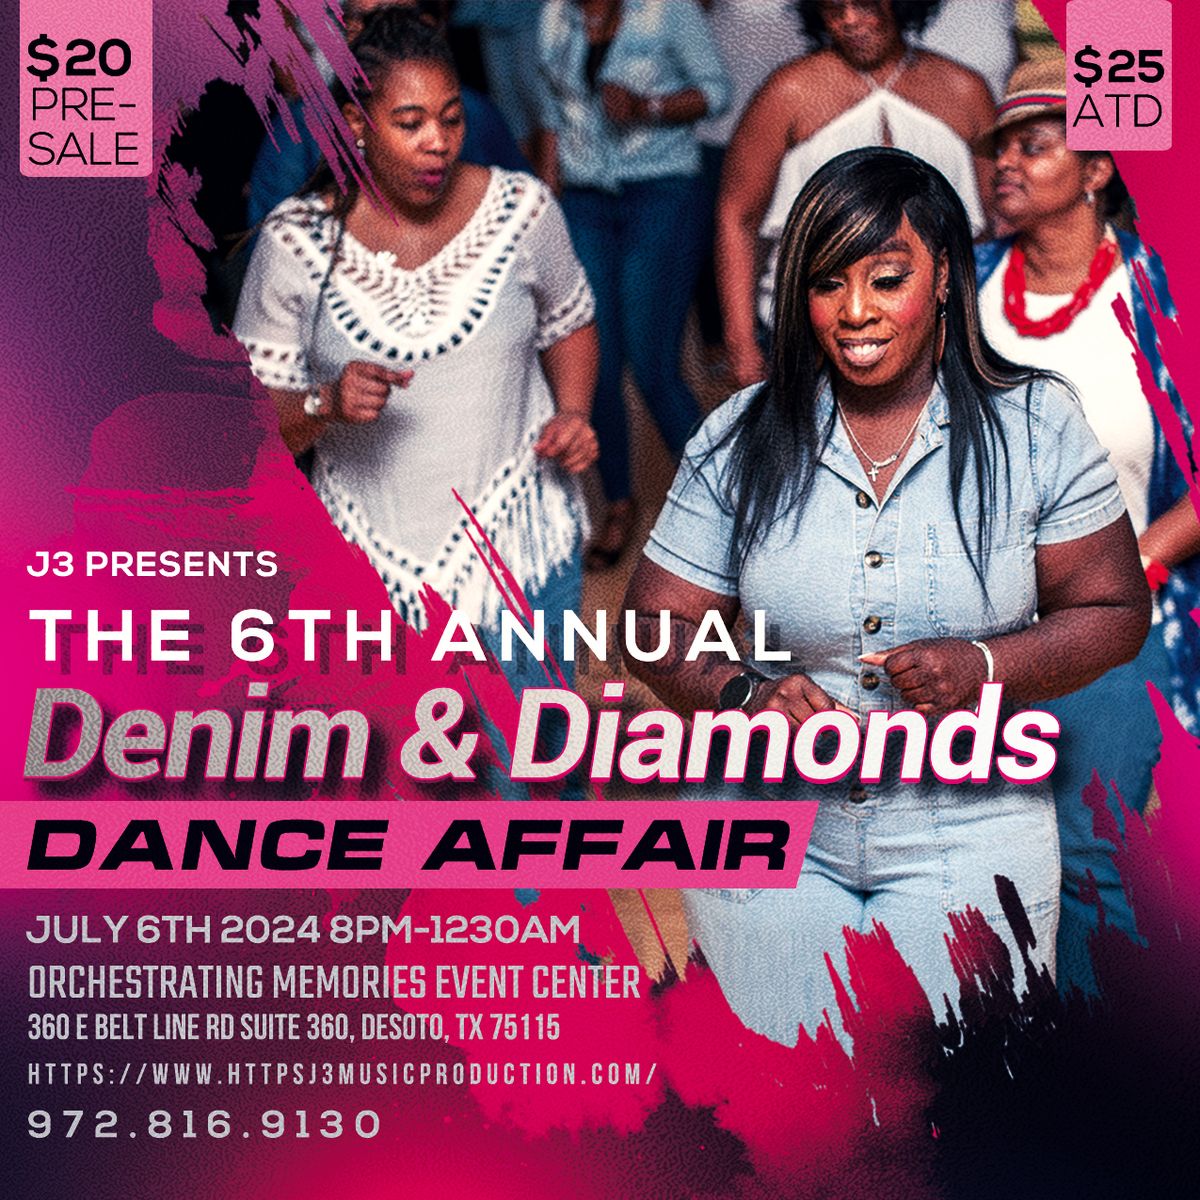 J3 Presents The 6th Annual Denim & Diamonds Dance Affair